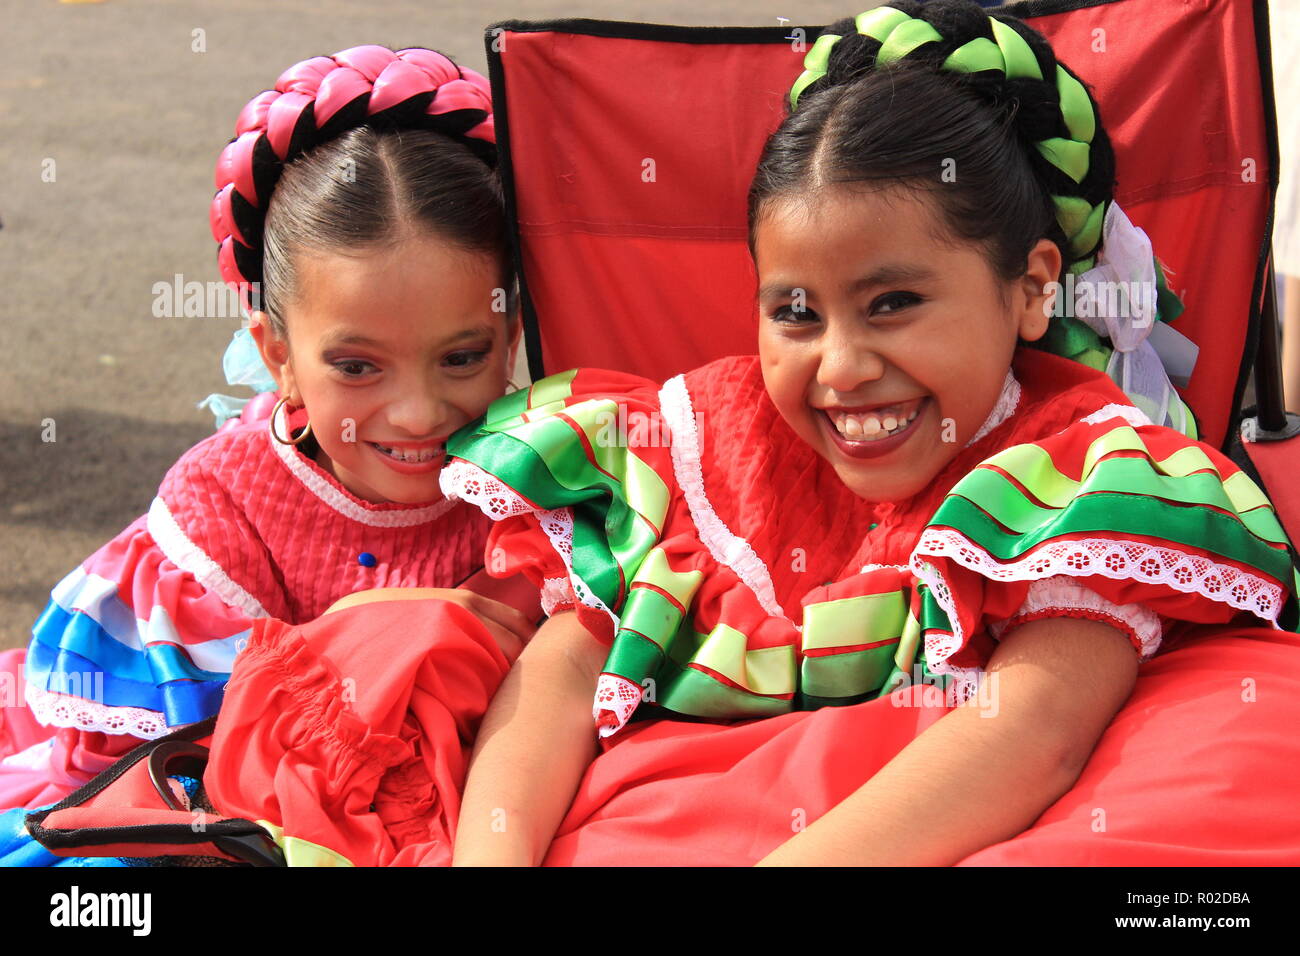 Enumerar Leia Shinkan Vestidos mexicanos fotografías e imágenes de alta resolución - Alamy